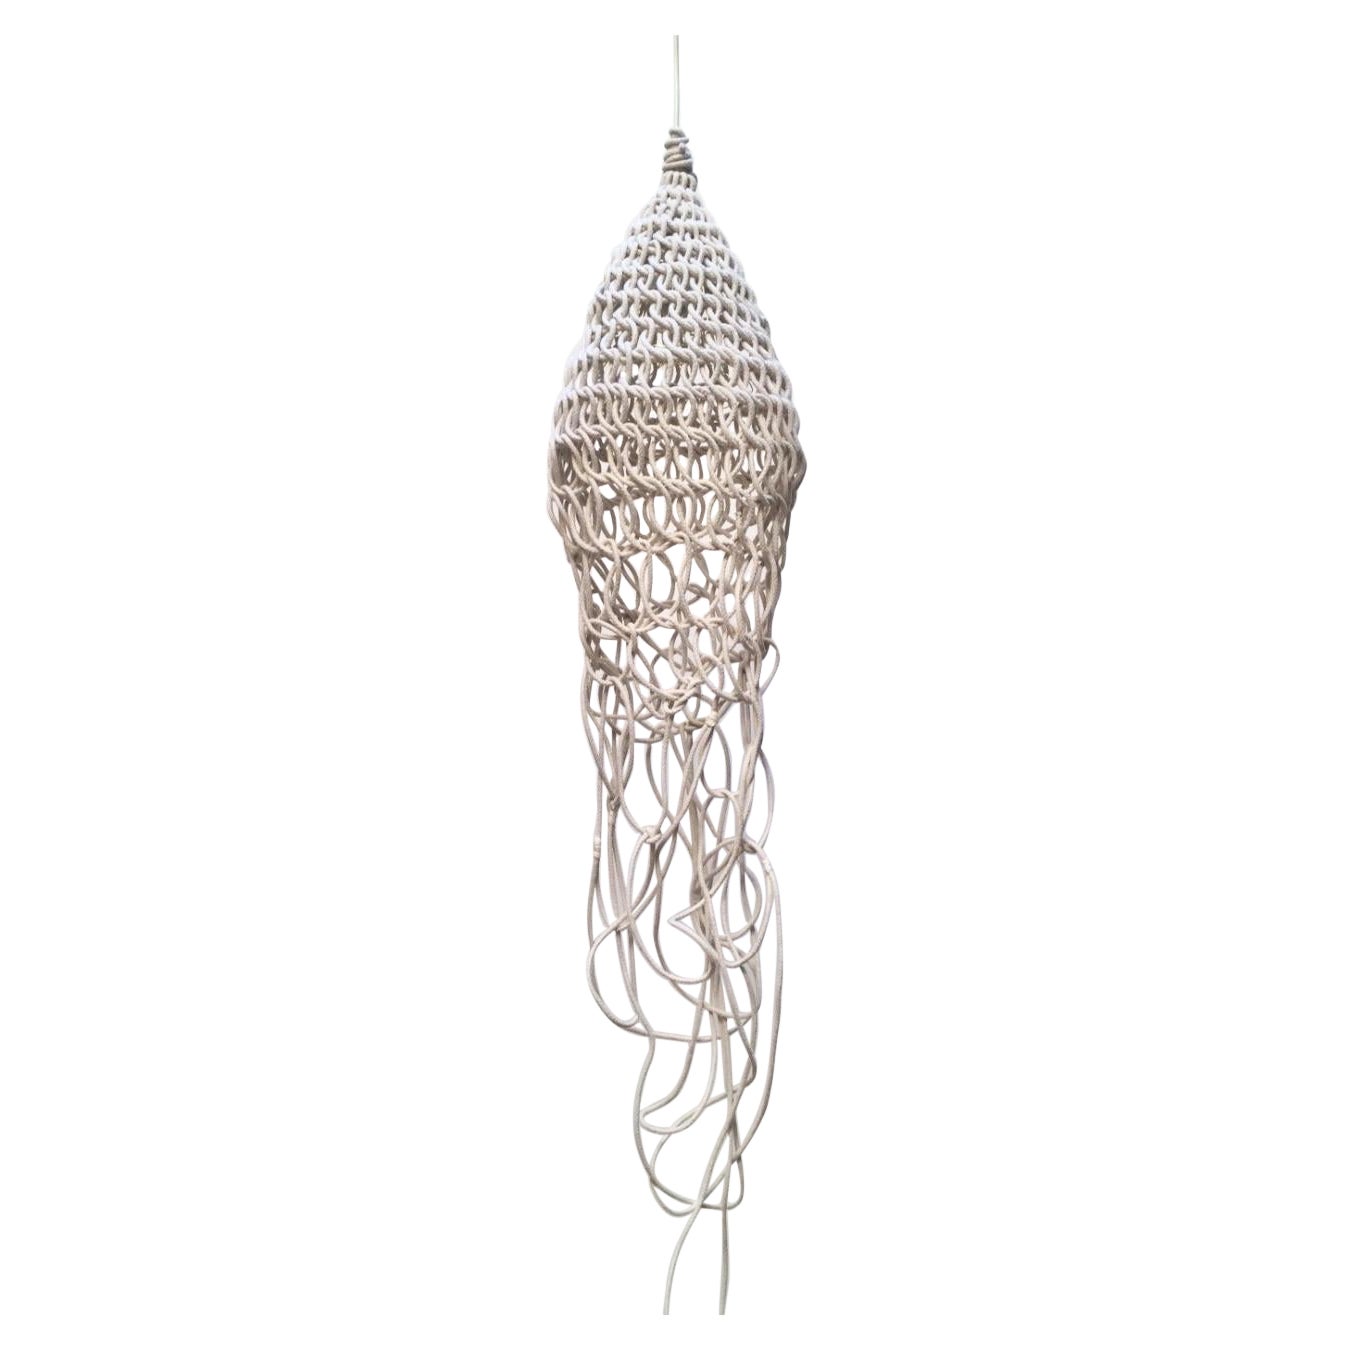 Medusa Sculptural Lamp Hand Crocheted by Annie Legault Amulette